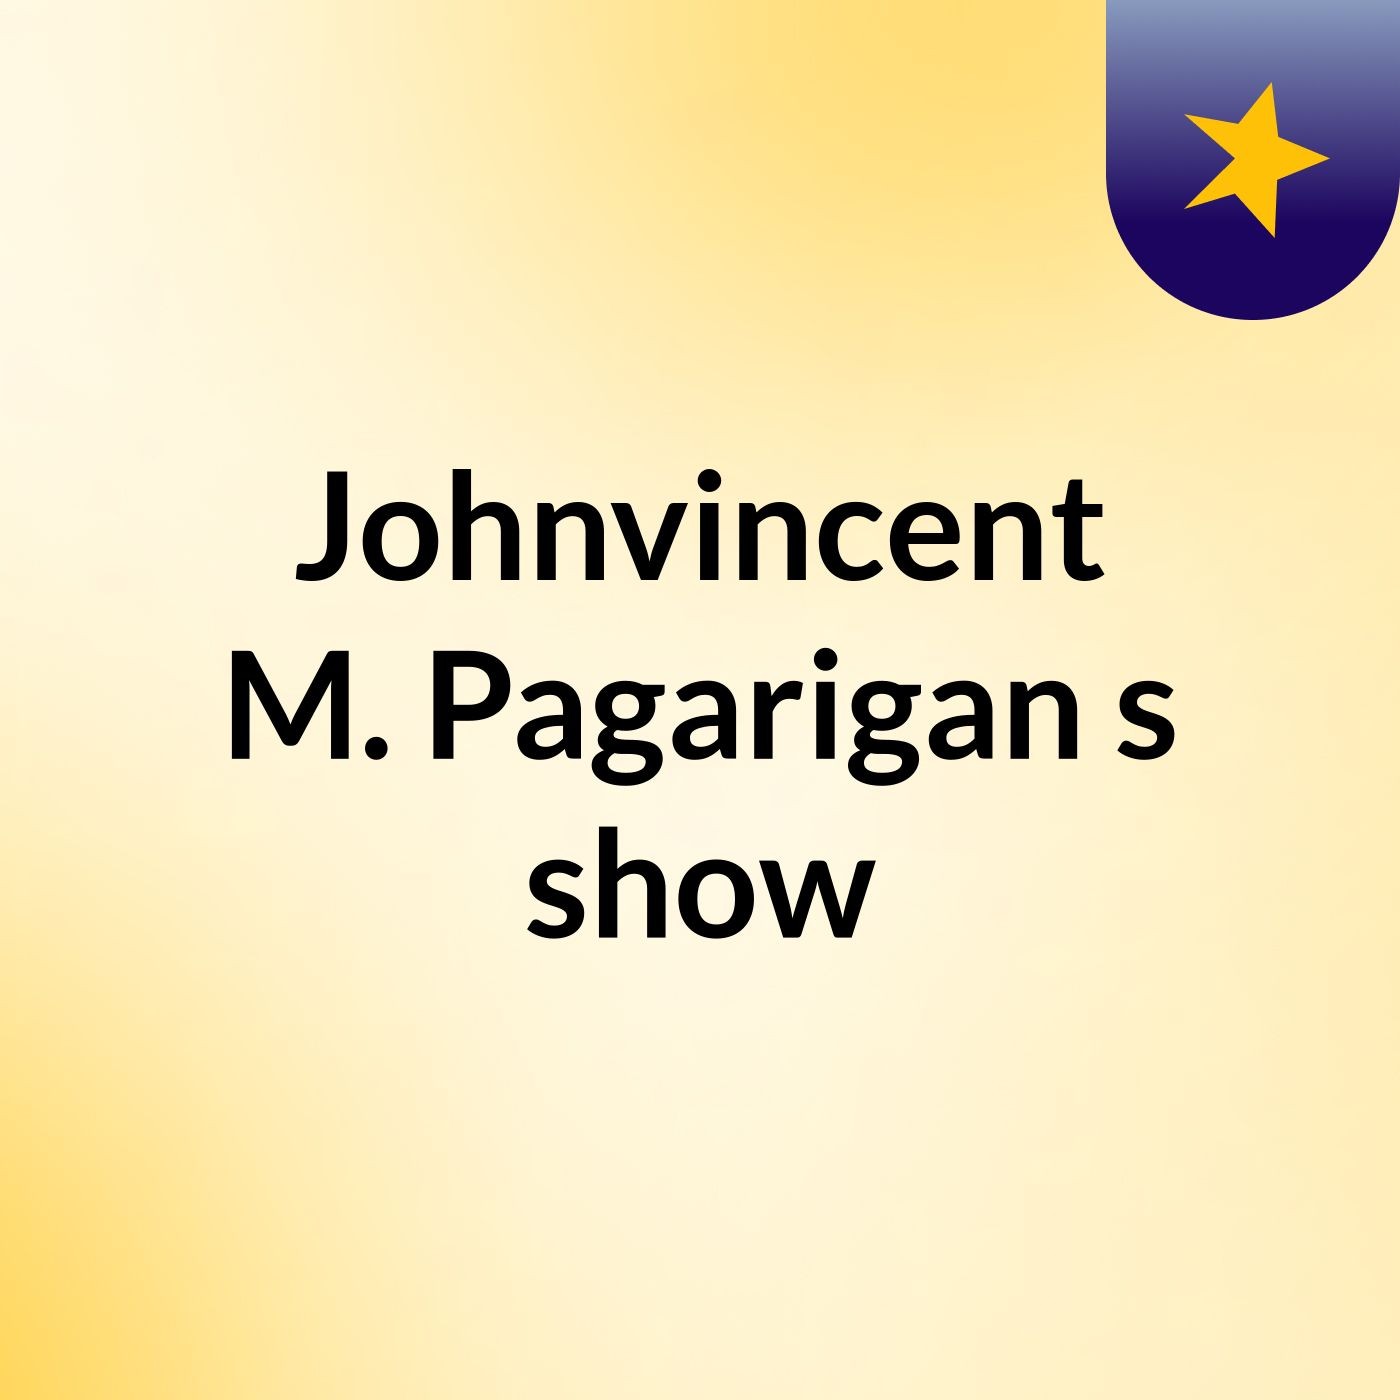 Johnvincent M. Pagarigan's show